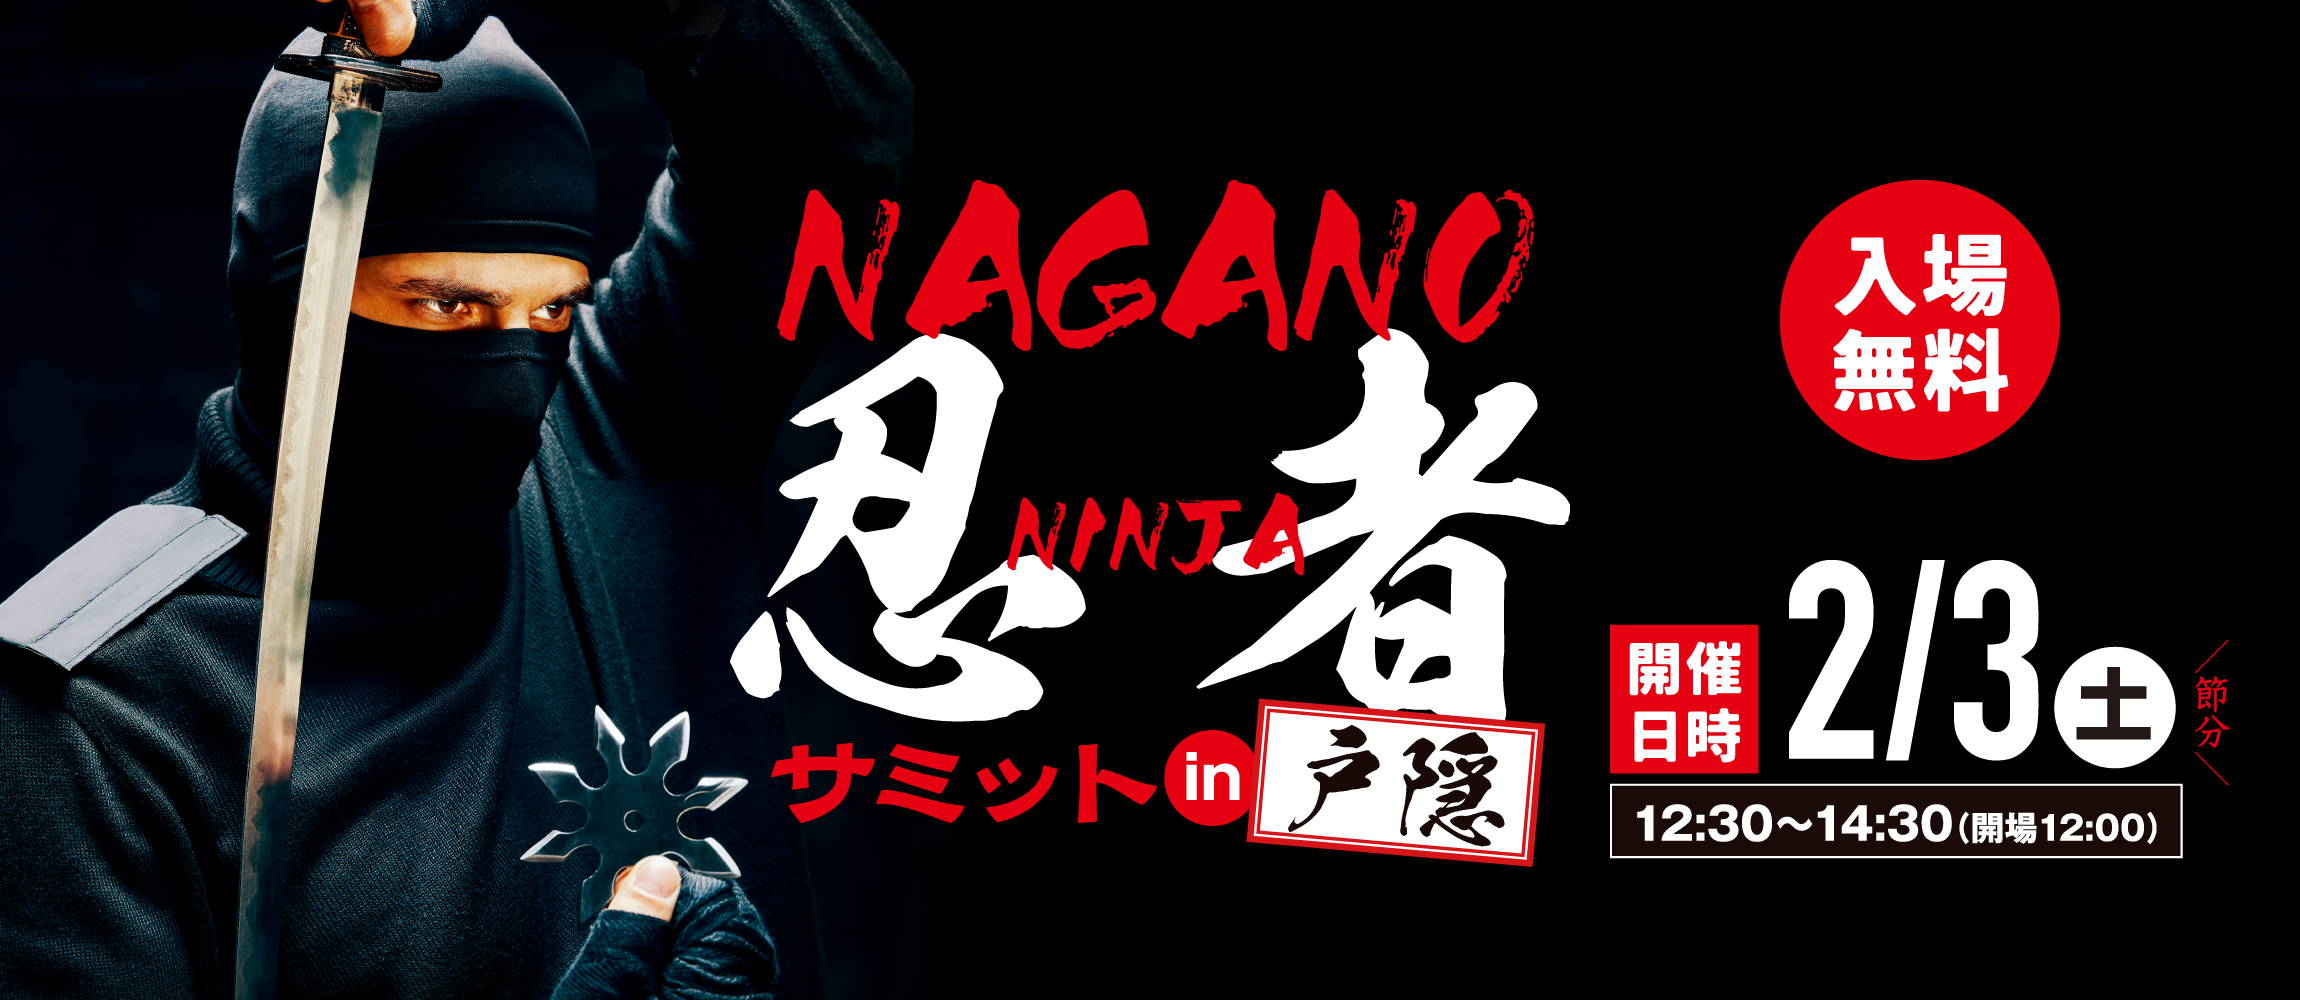 Nagano 忍者 Ninja サミット in 戸隠 入場無料 2/3(土)